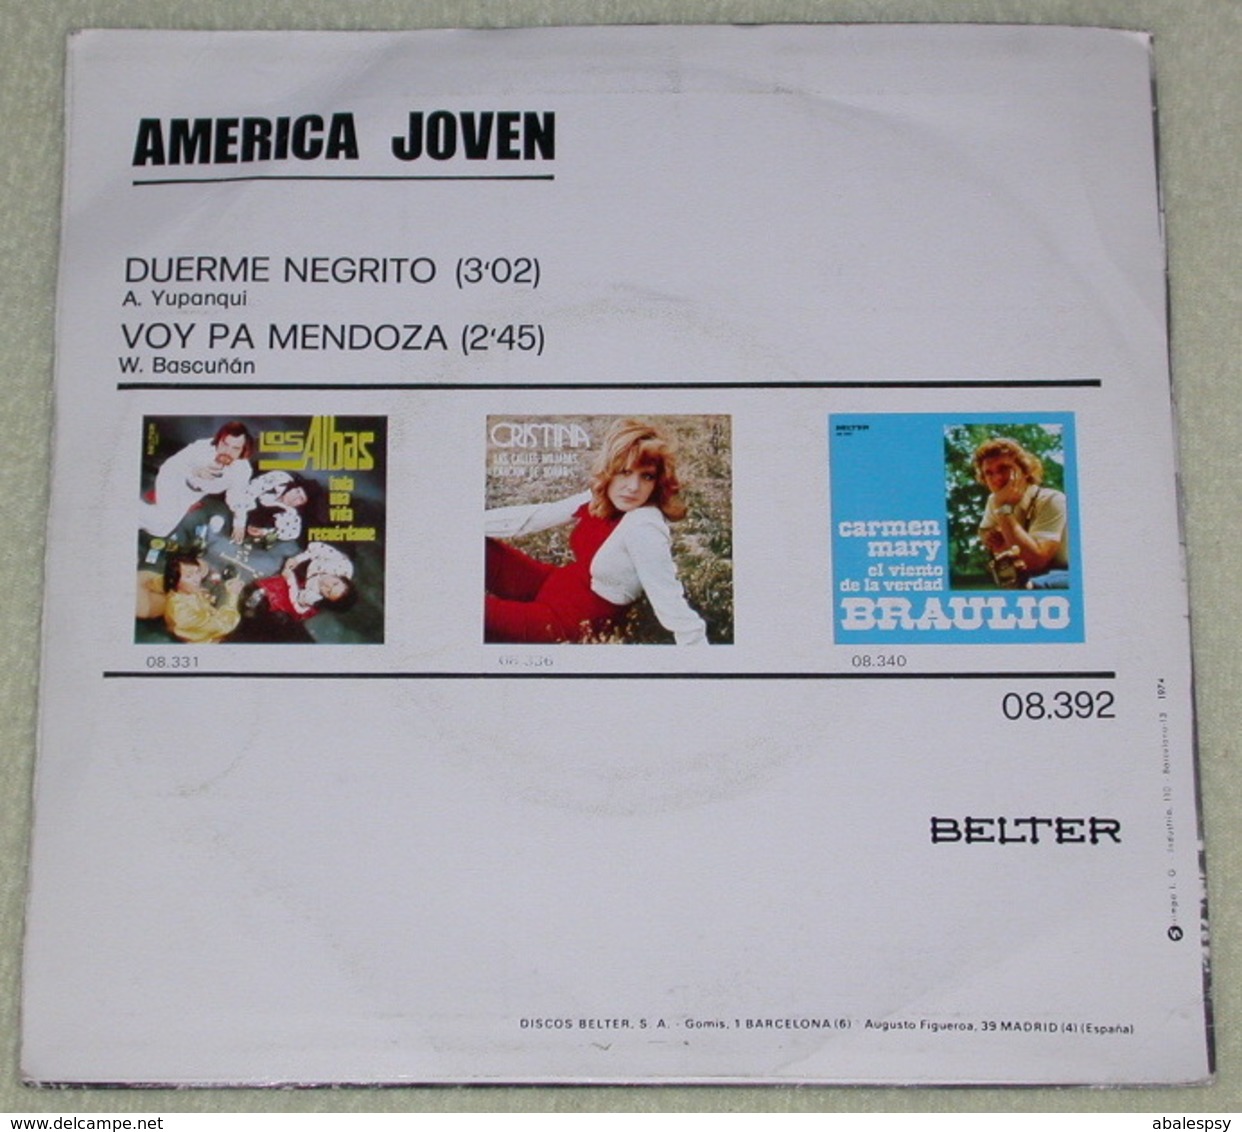 America Joven 45t Duerme Negrito / Voy Pa Mendoza EX M - Other - Spanish Music